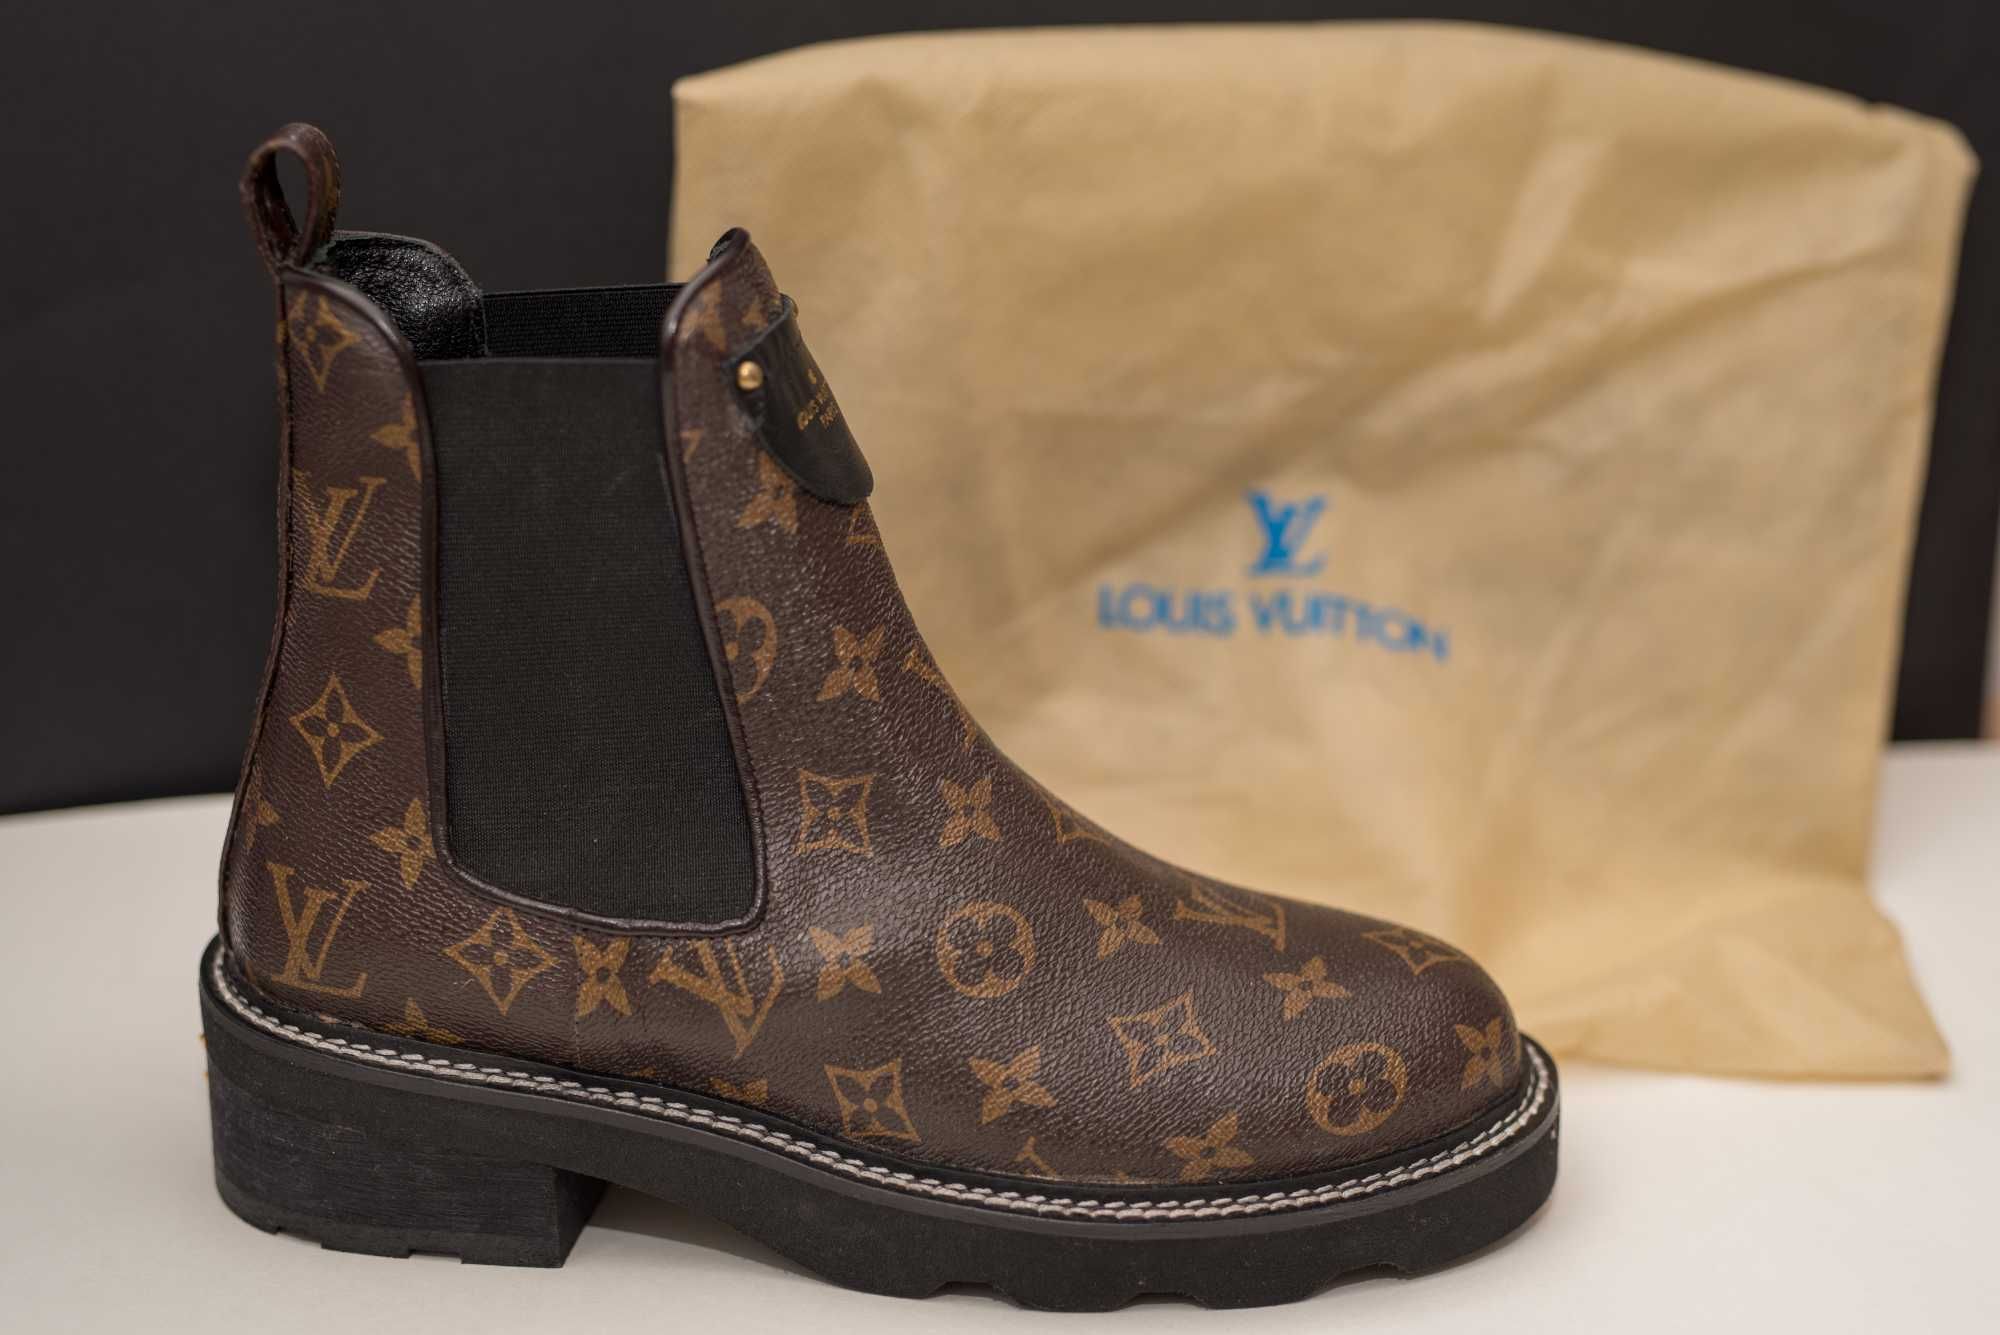 Louis Vuitton ankle boots - ghete pana la glezna Bucuresti Sectorul 3 •